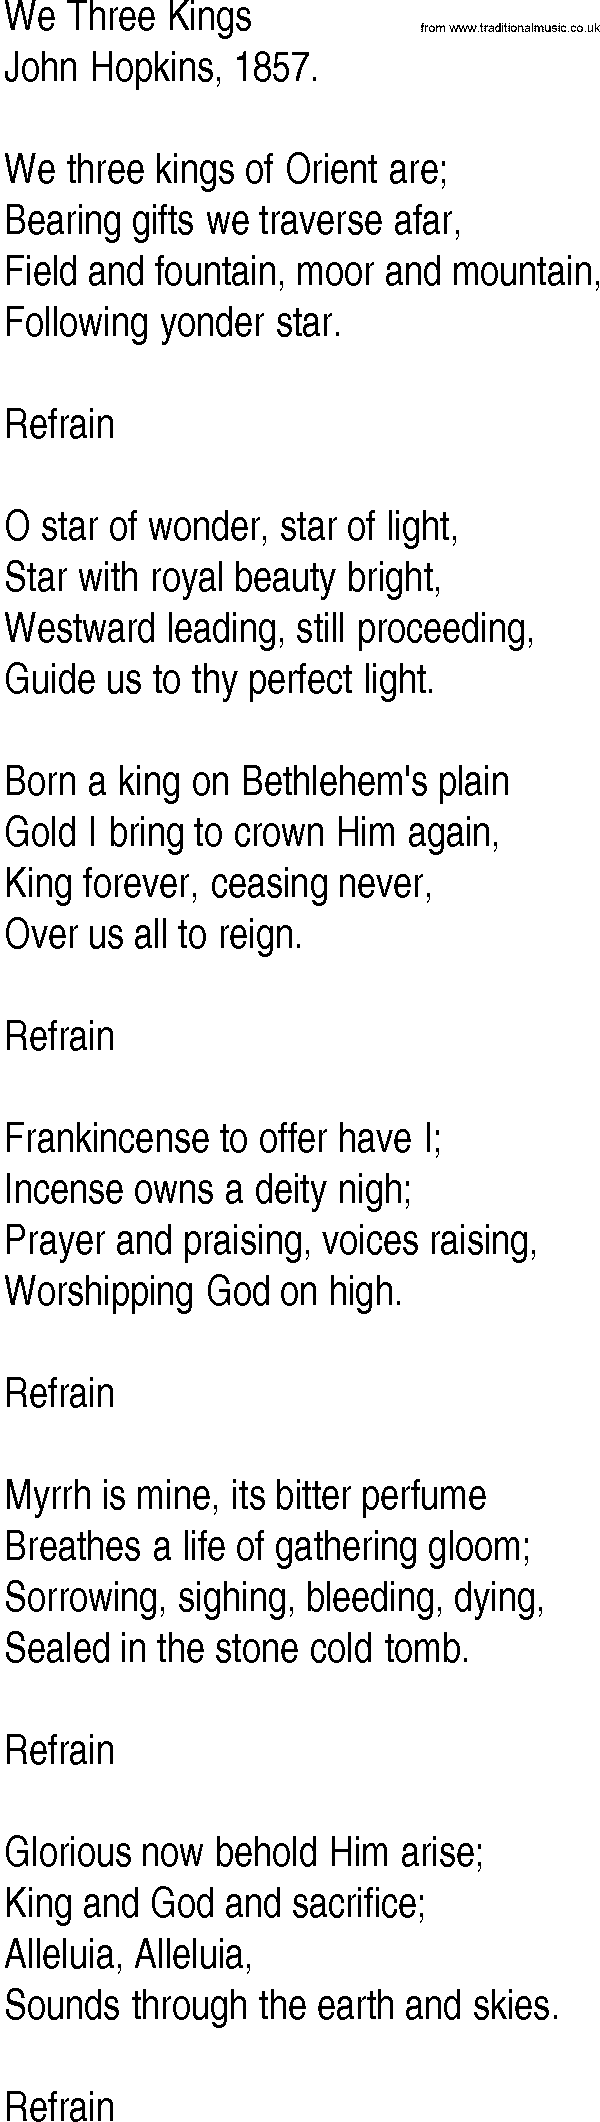 Hymn and Gospel Song Lyrics for We Three Kings by John Hopkins